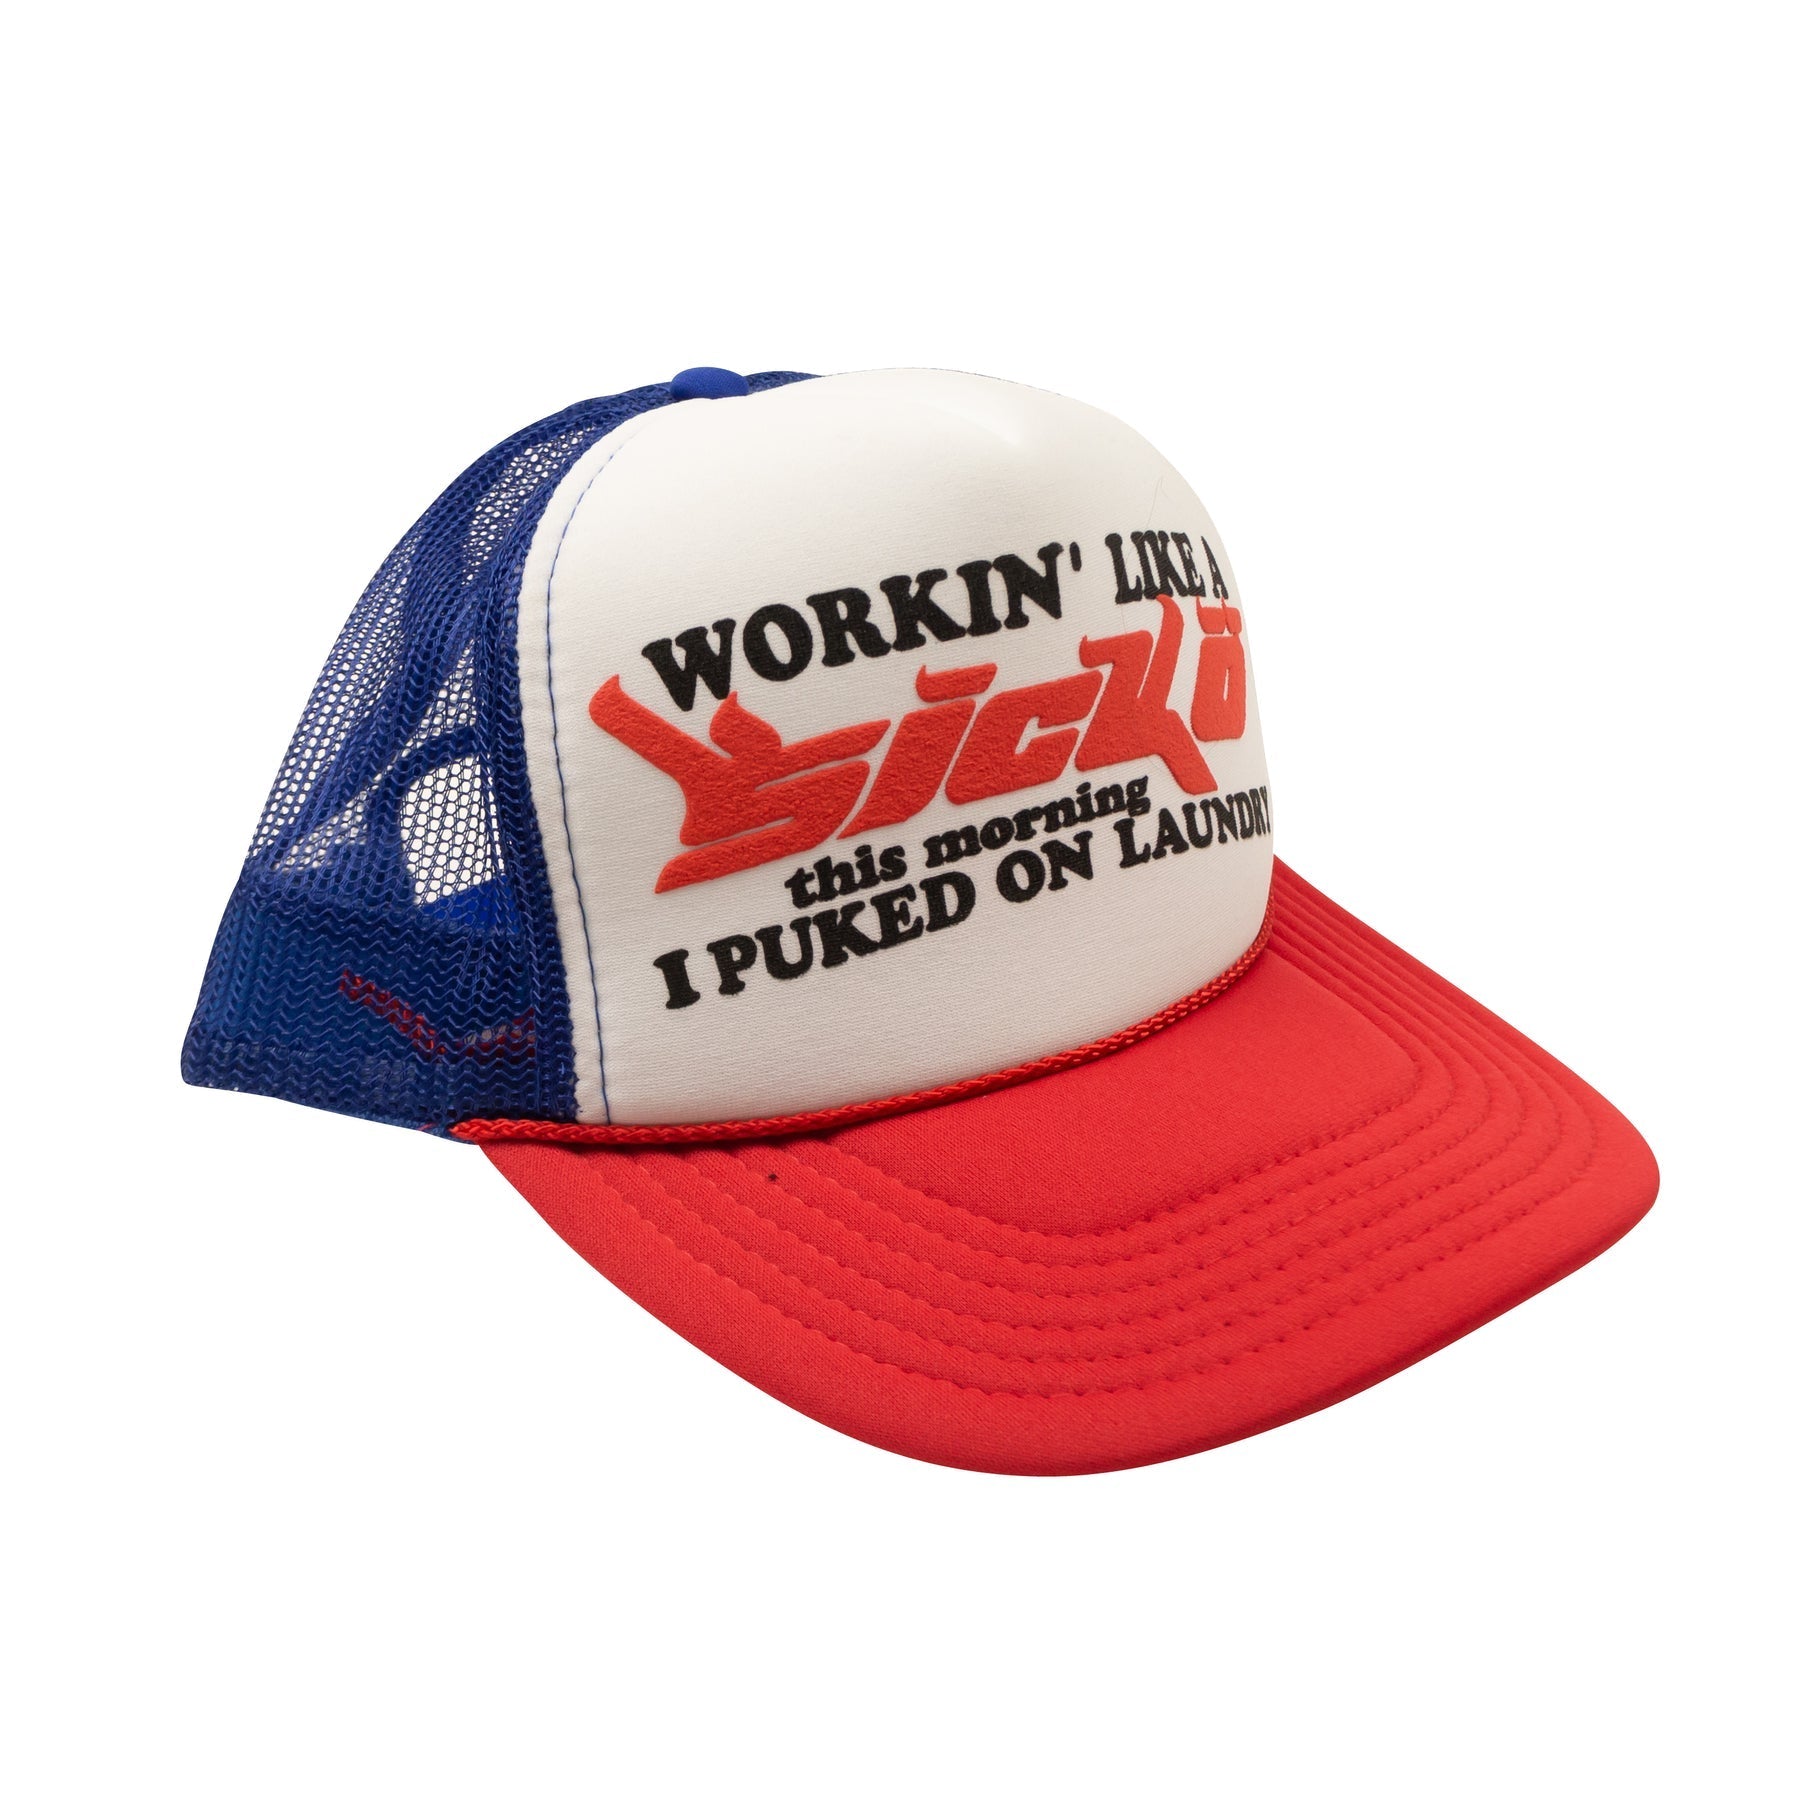 SICKO RED WHITE & BLUE WORKING LIKE A SICKO TRUCKER HAT CAP